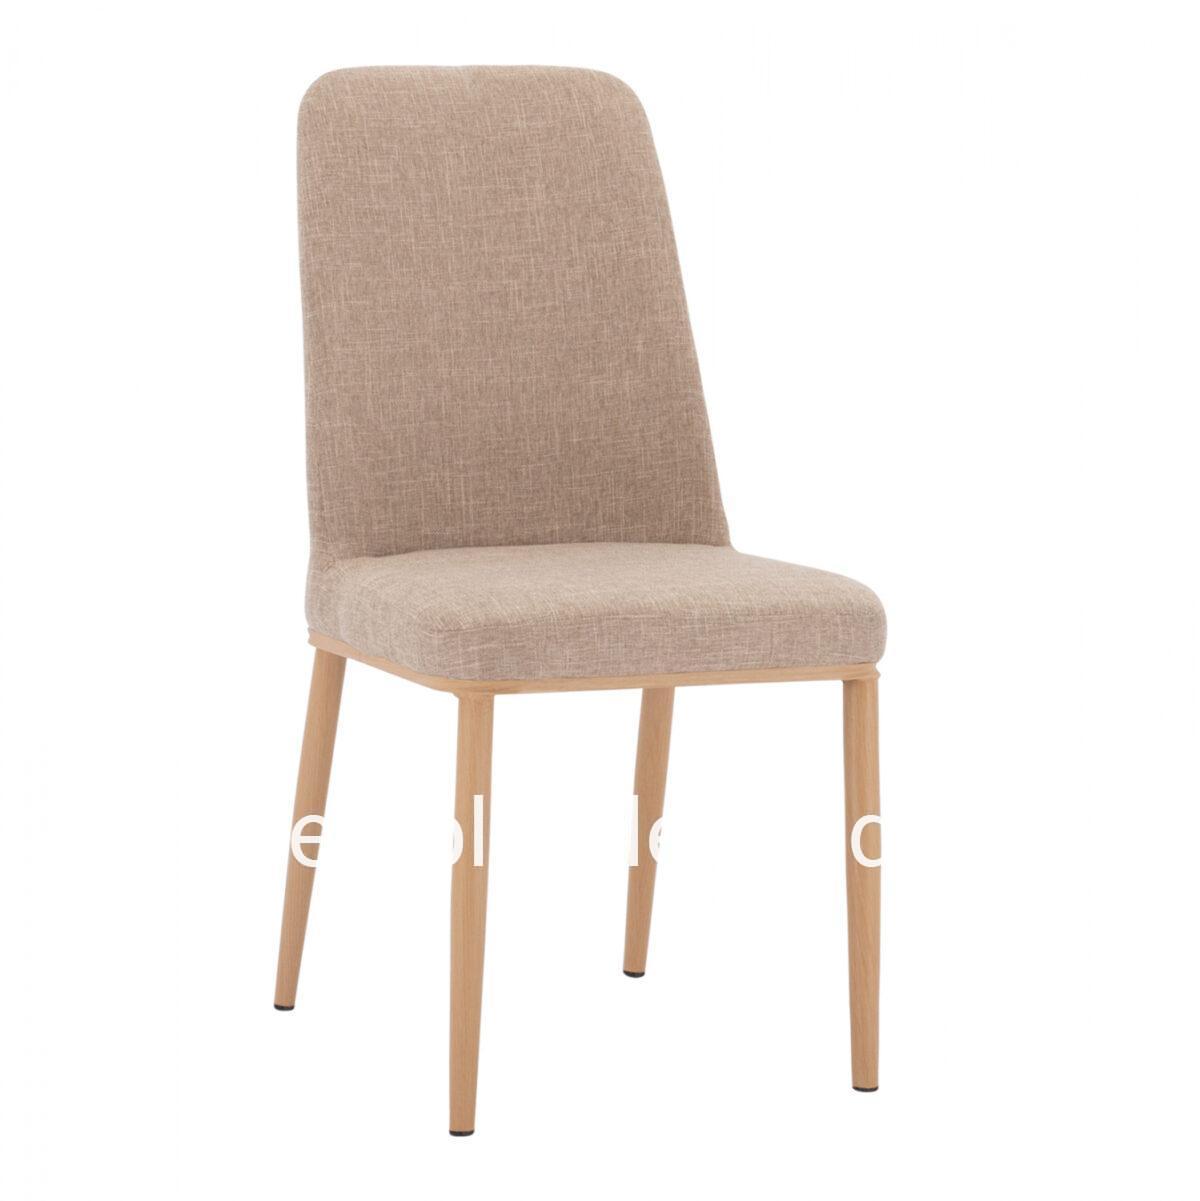 Dining chair Eilish in beige fabric & metallic frame HM8727.02 44X43X90